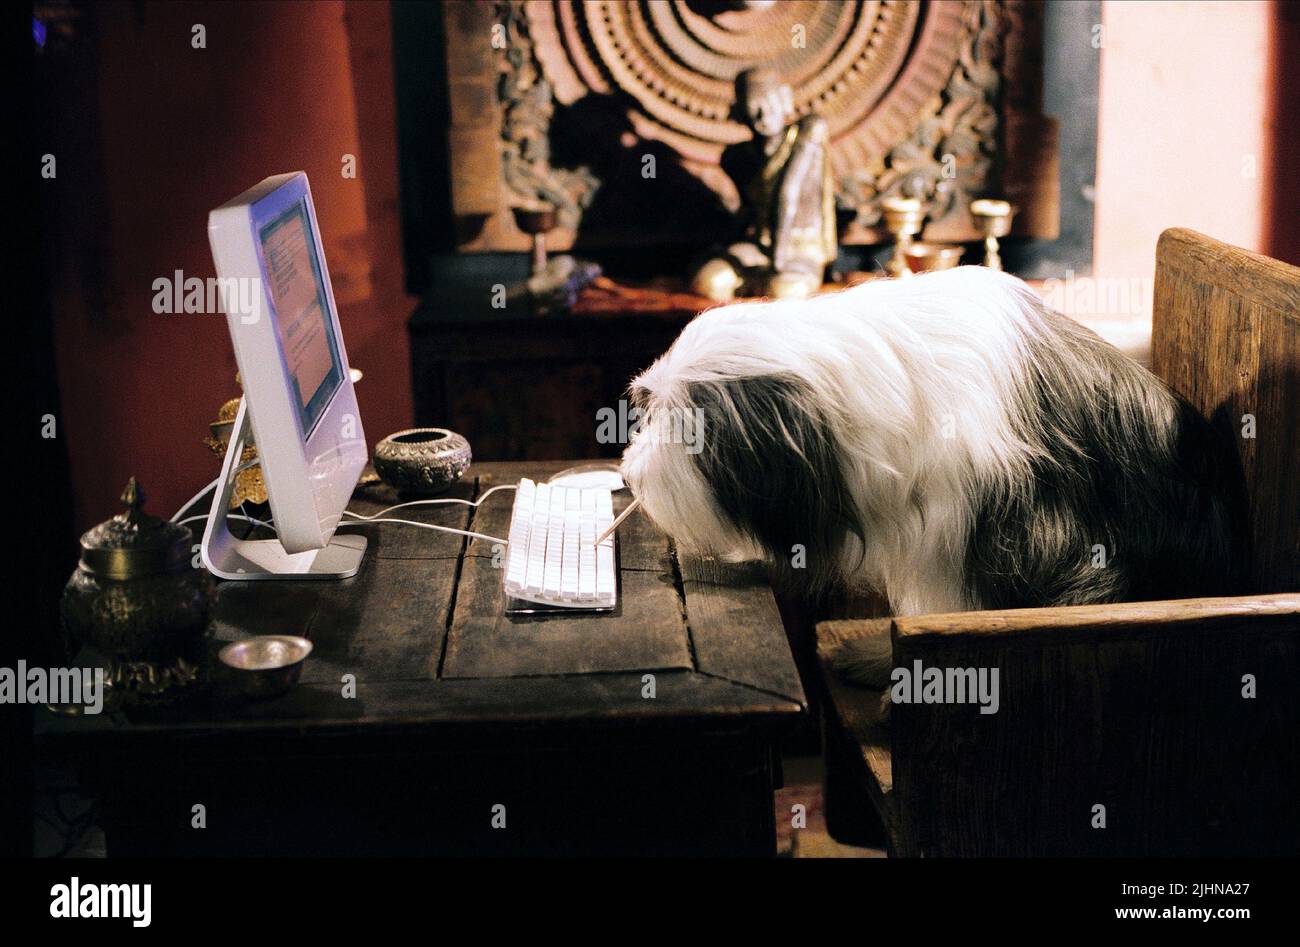 DOG USES COMPUTER, THE SHAGGY DOG, 2006 Stock Photo